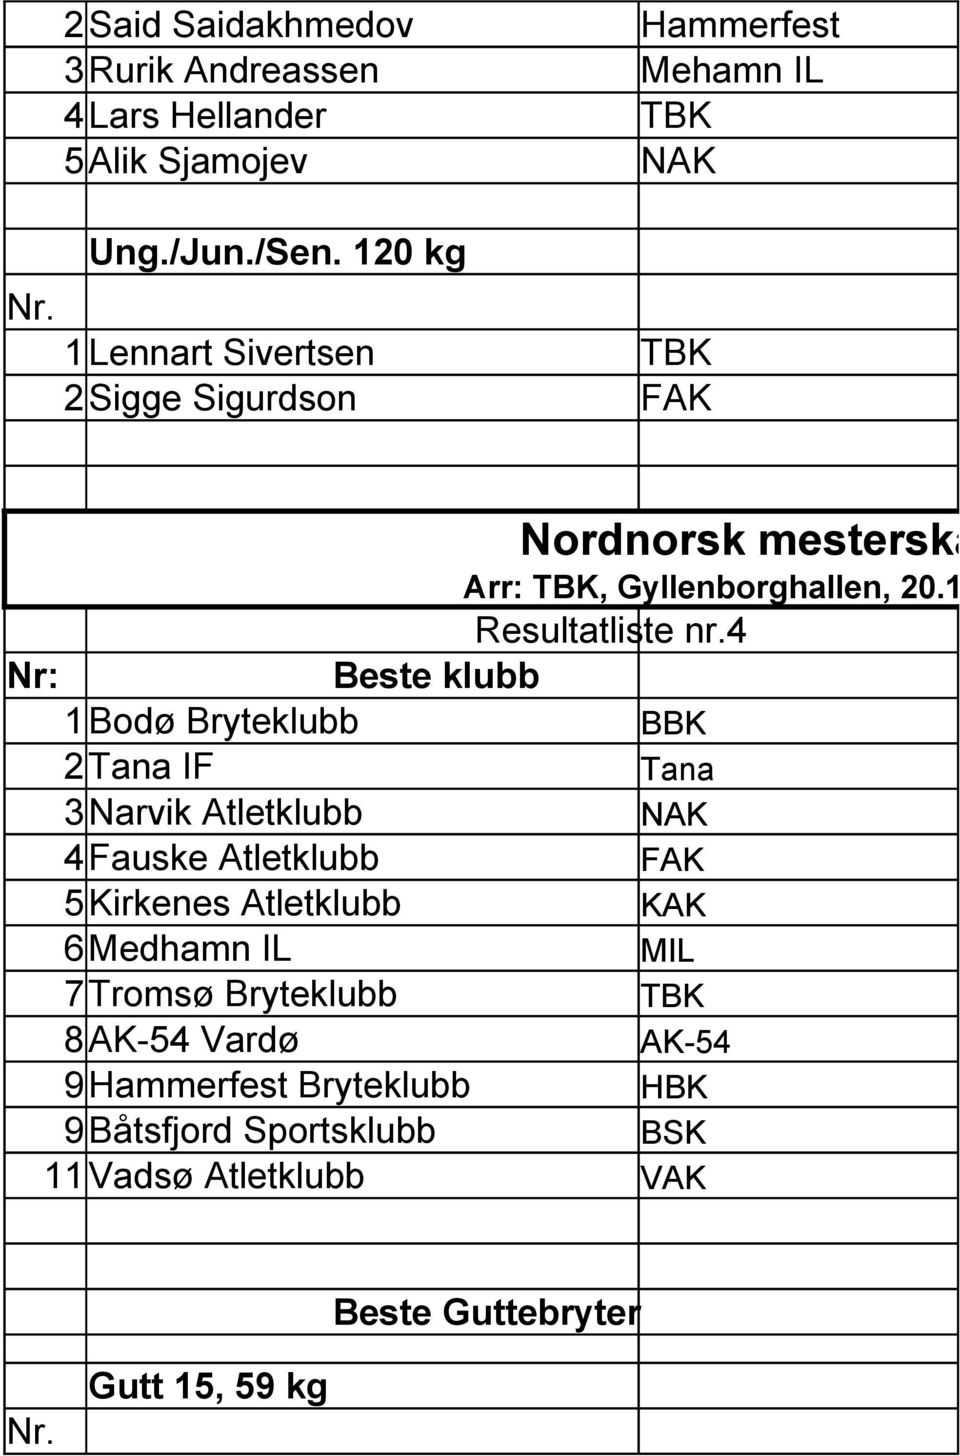 4 Nr: Beste klubb 1 Bodø Bryteklubb BBK 2 Tana IF Tana 3 Narvik Atletklubb NAK 4 Fauske Atletklubb FAK 5 Kirkenes Atletklubb KAK 6